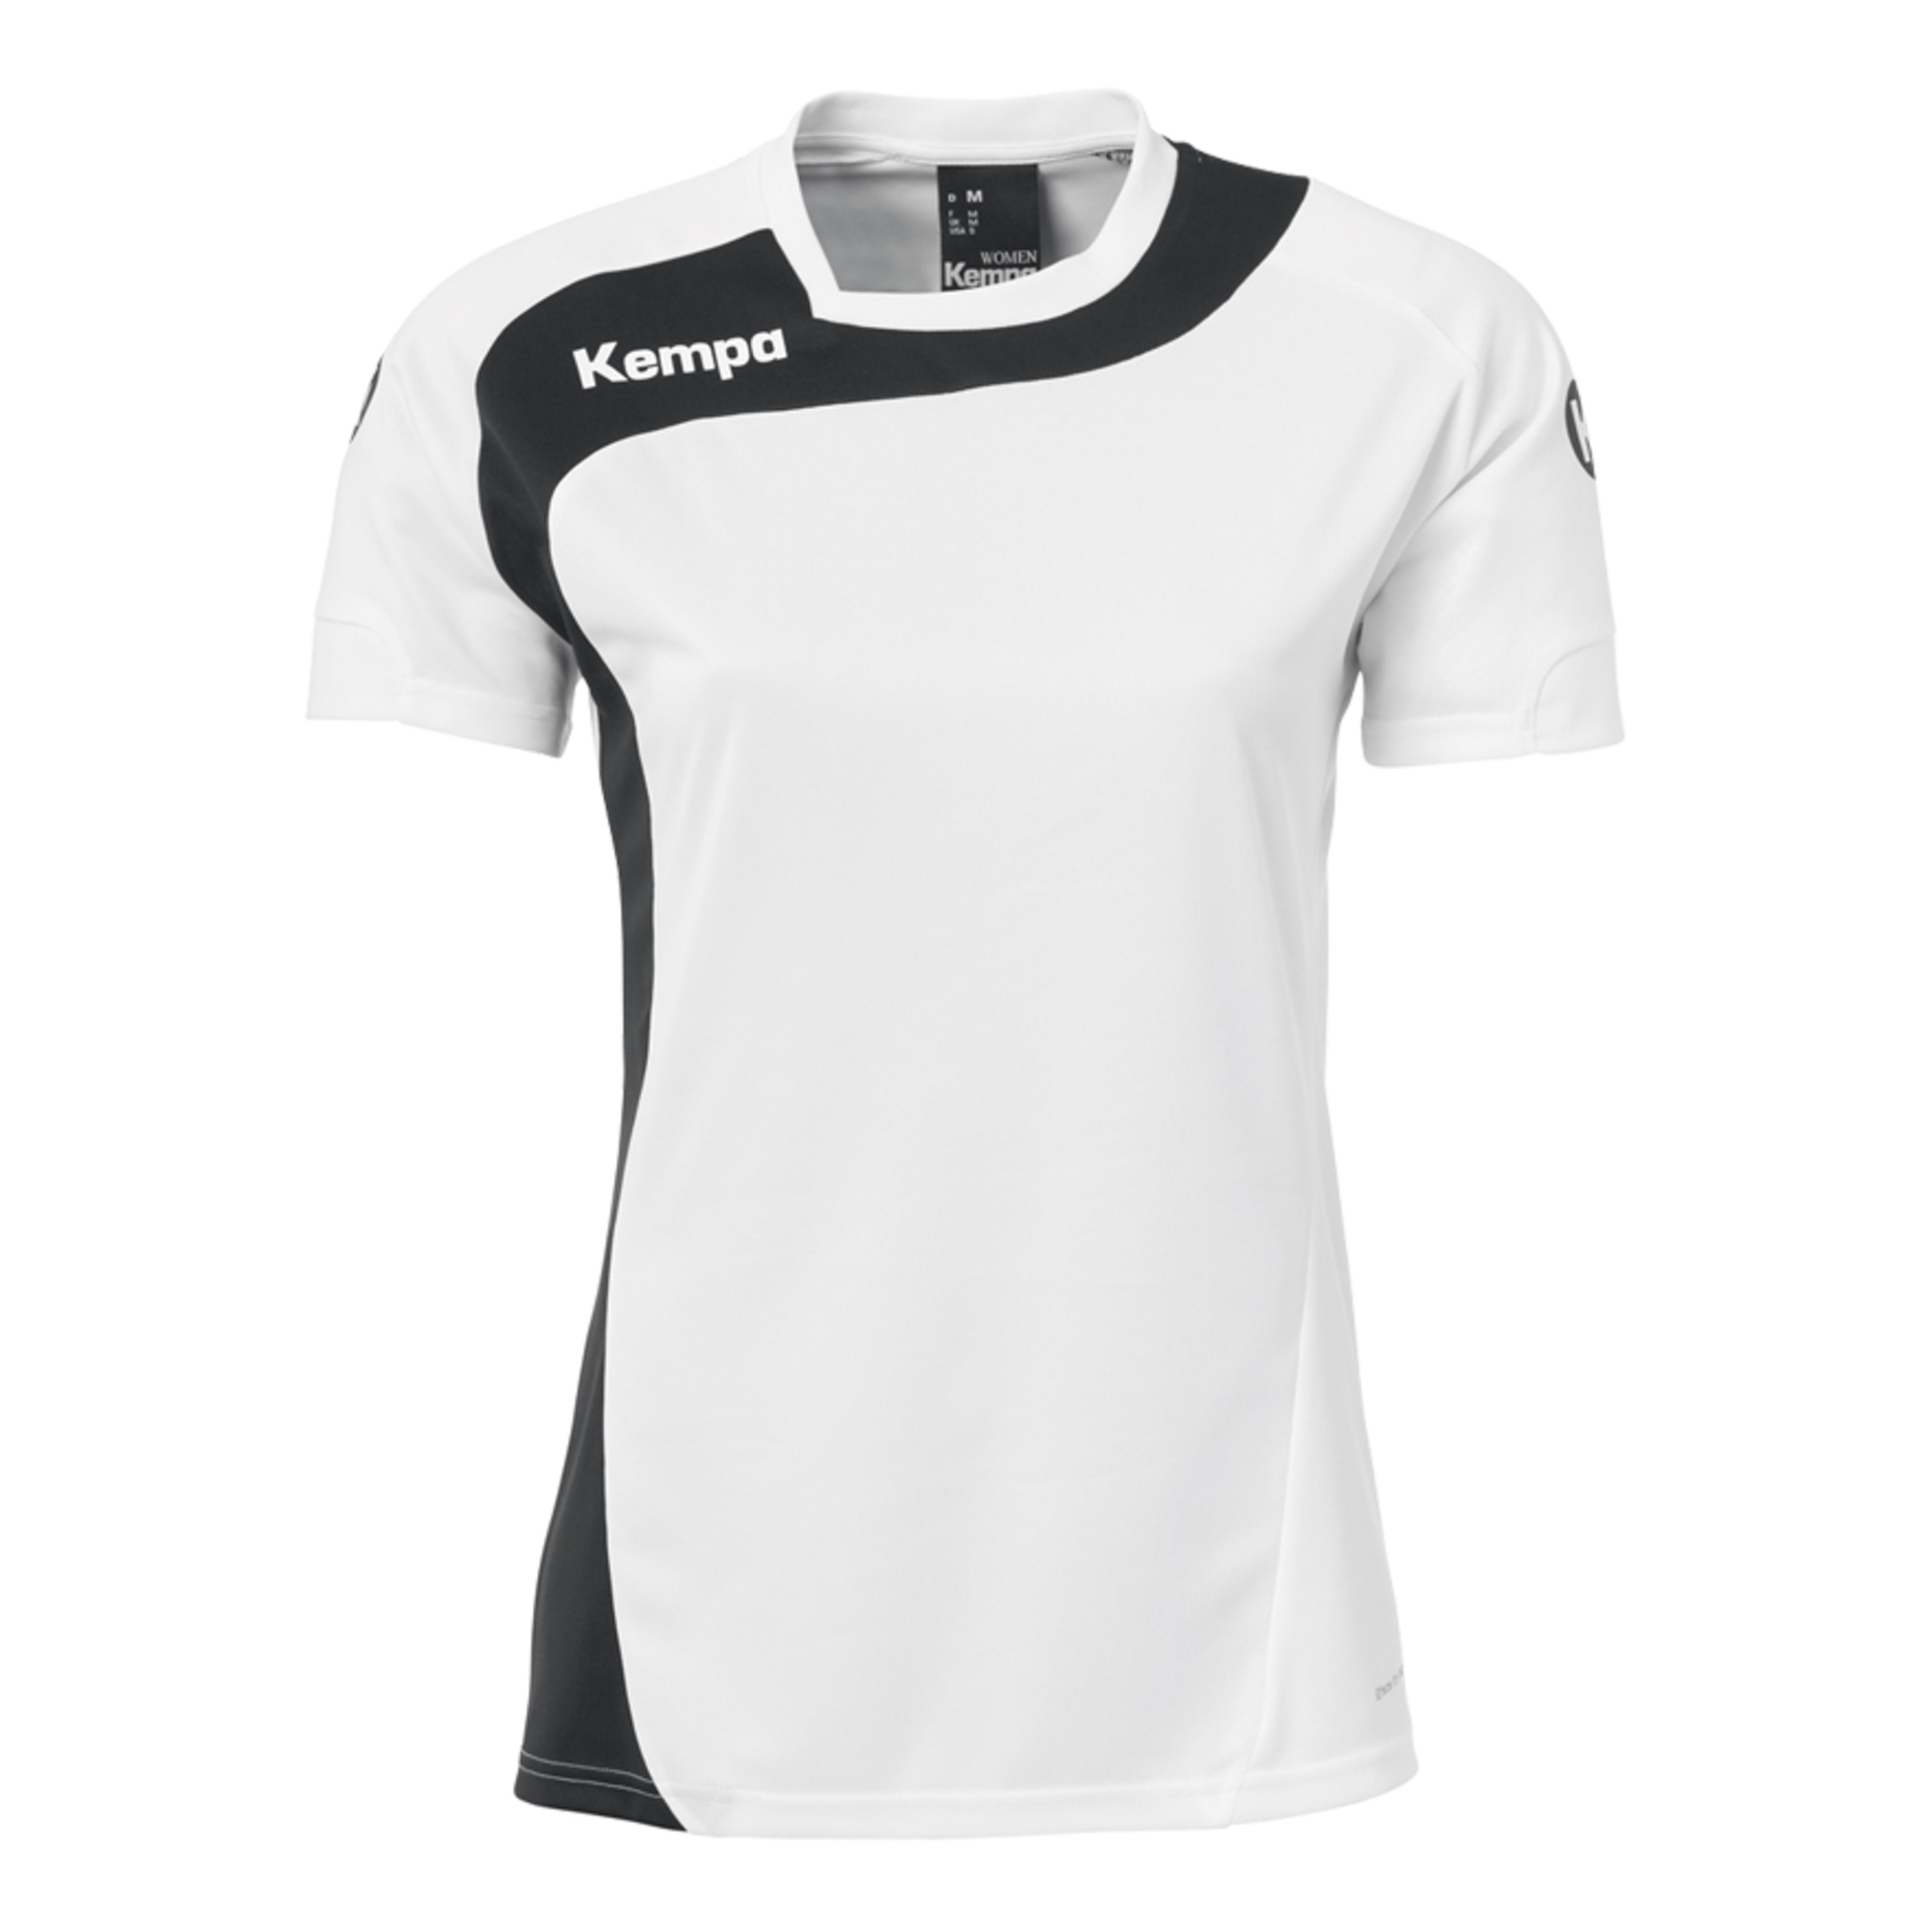 Peak Camiseta De Mujer Blanco/negro Kempa - blanco - 